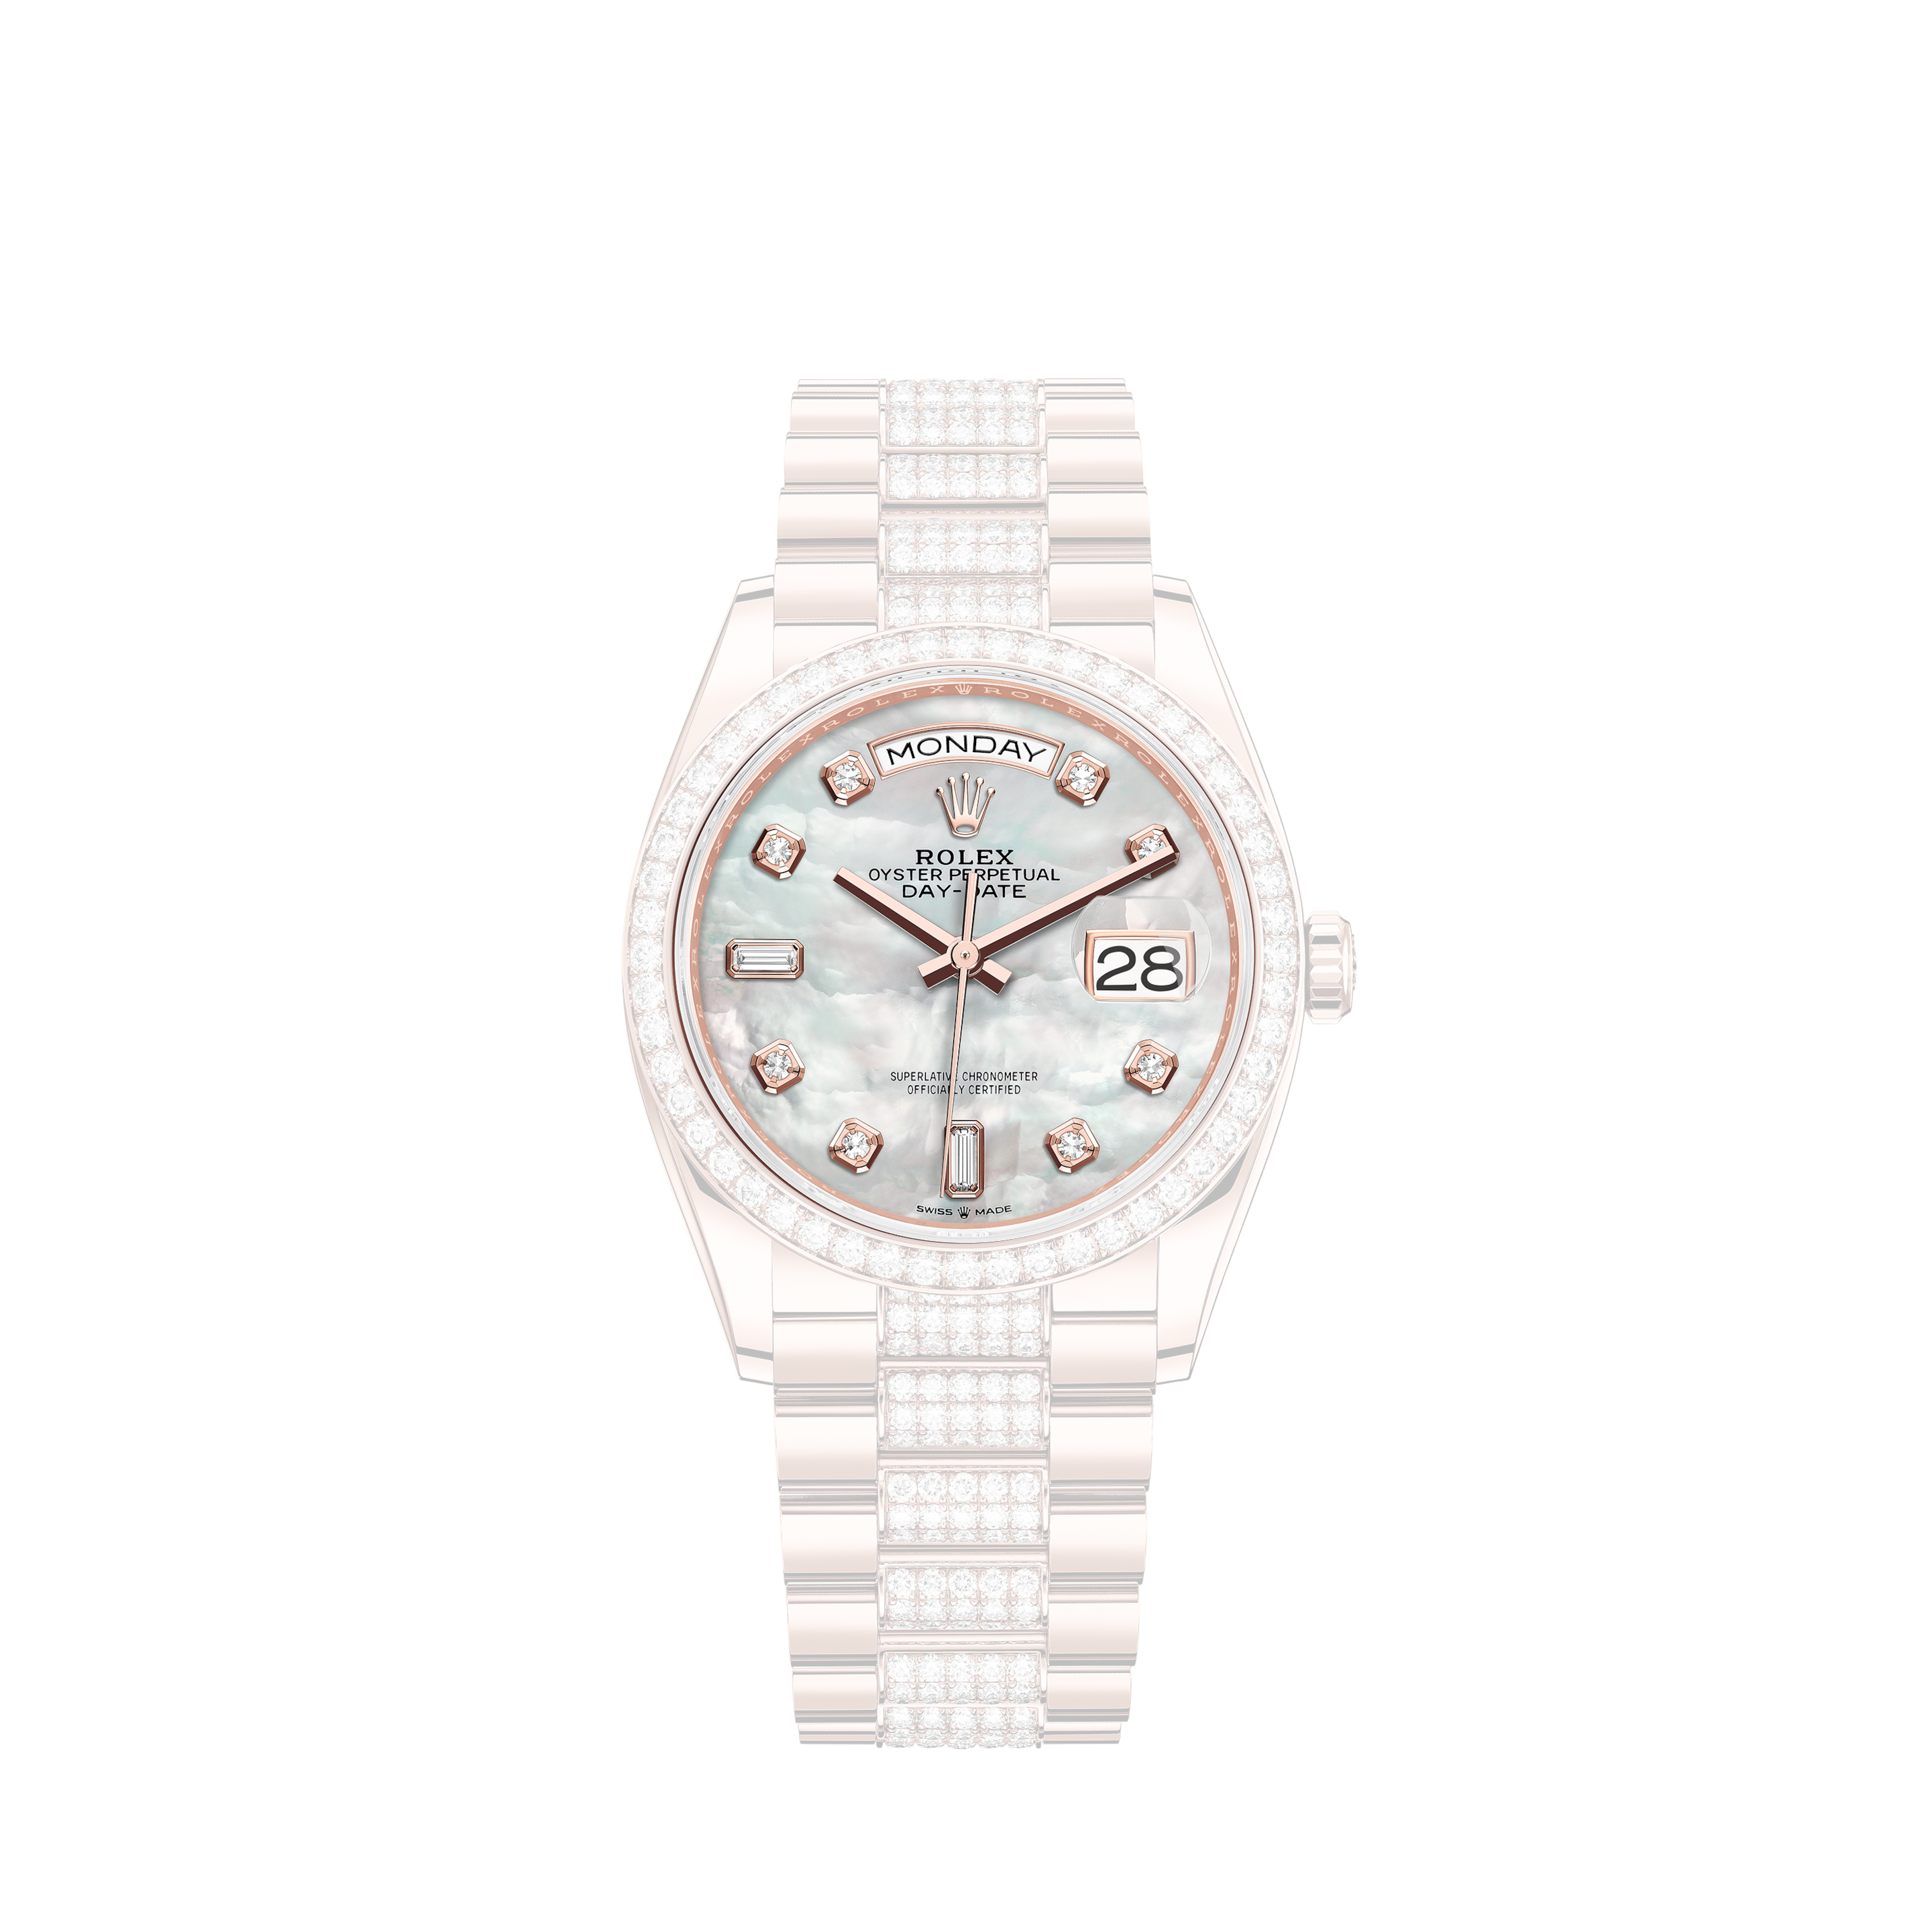 Rolex 1975 Vintage Rolex Thunderbird Datejust Reference 1625 14K White Gold & Stainless Steel Watch (# 13566)